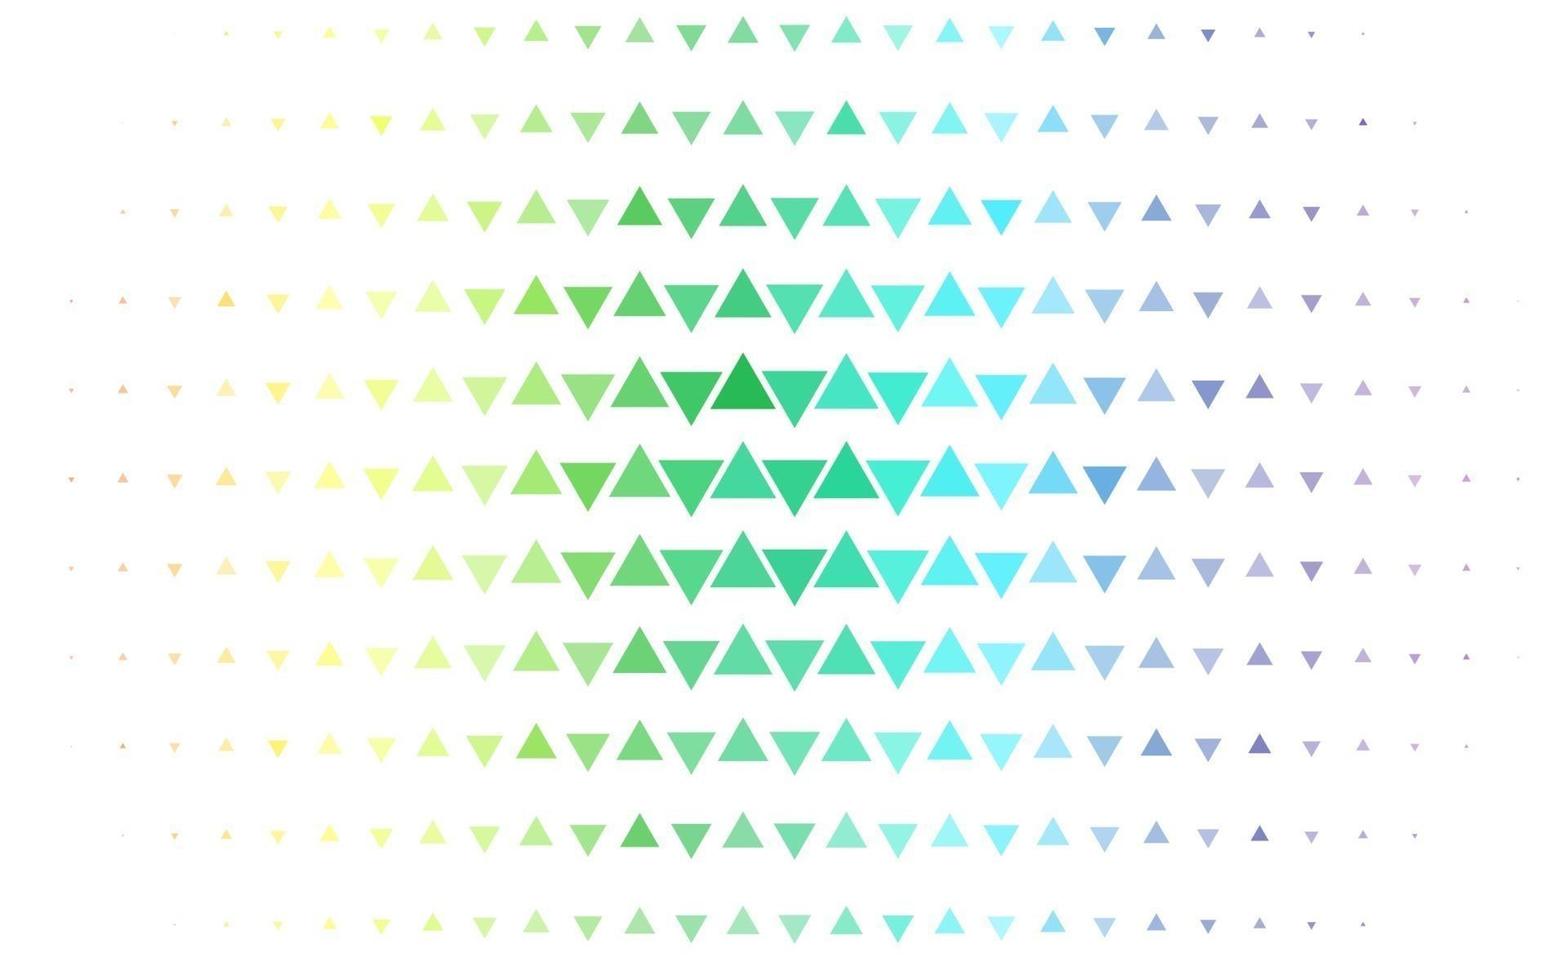 luz multicolor, layout de vetor de arco-íris com linhas, triângulos.